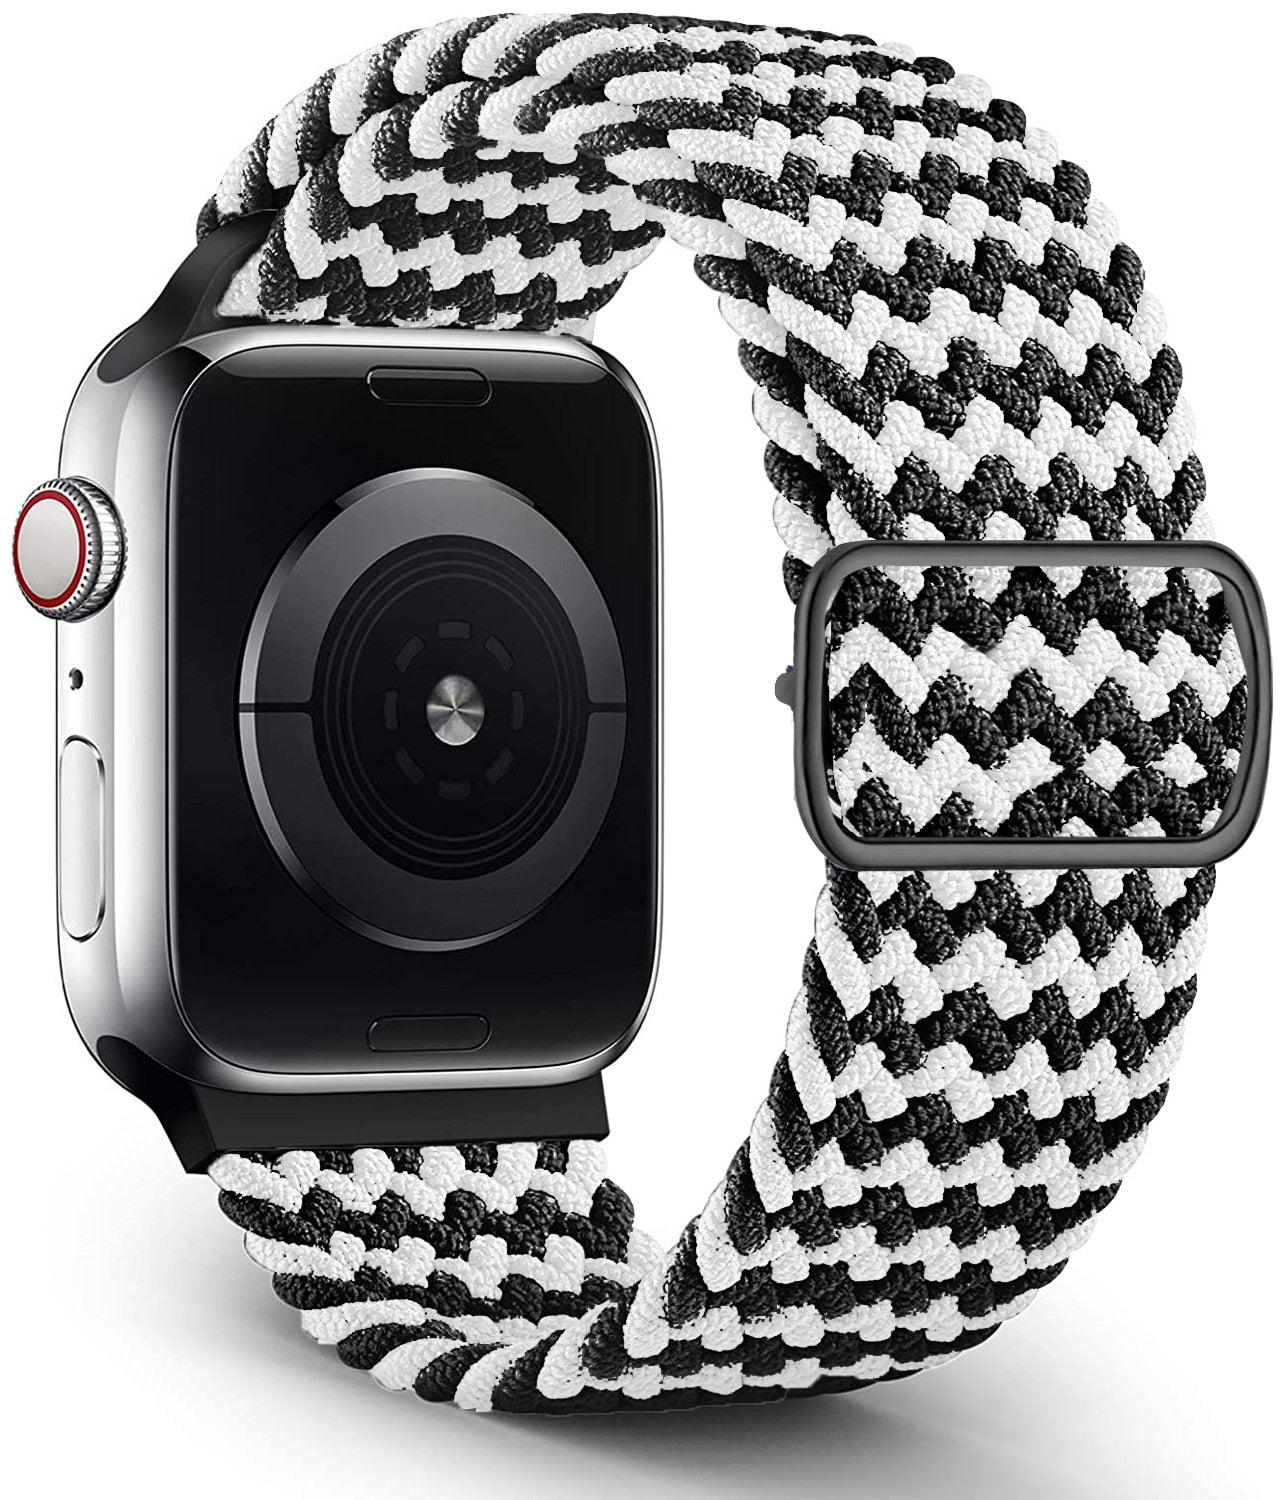 Peak Braided Nylon Watchband For Apple Watch